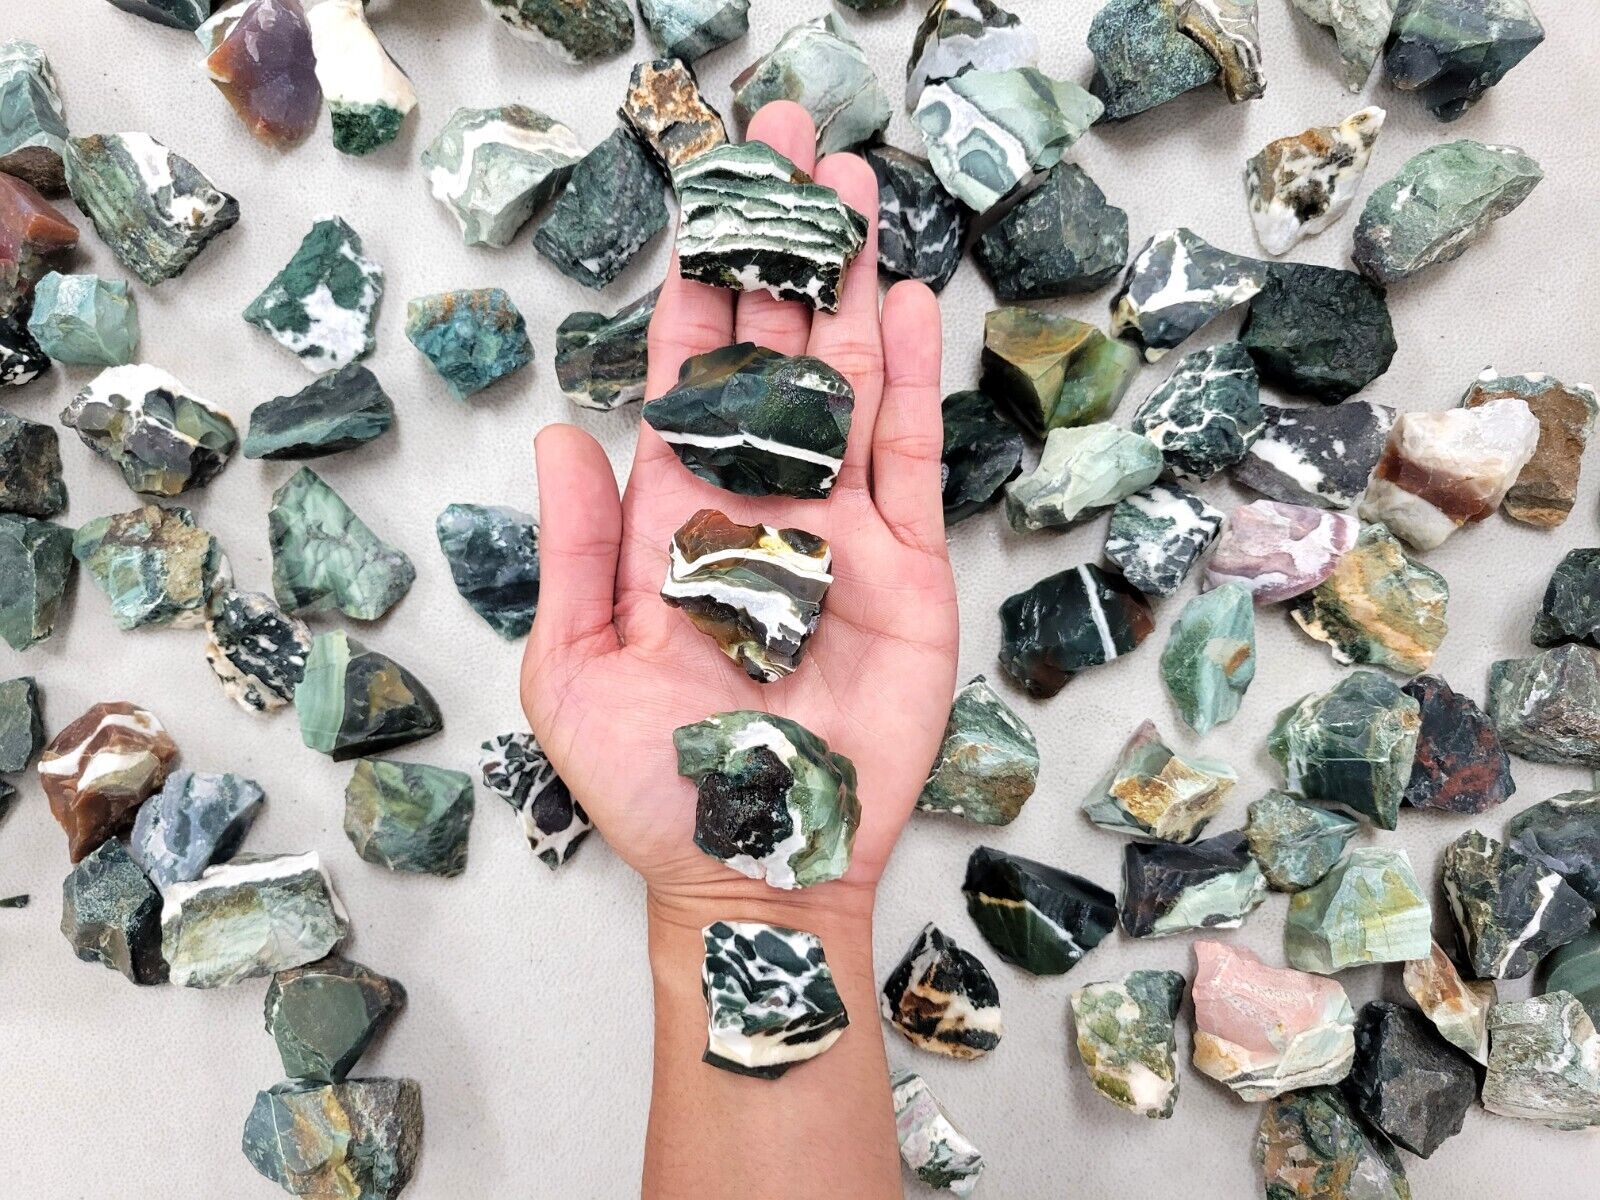 Indian Turquoise AKA Green Sardonyx Raw Rough Crystal Stones Bulk Natural Gems